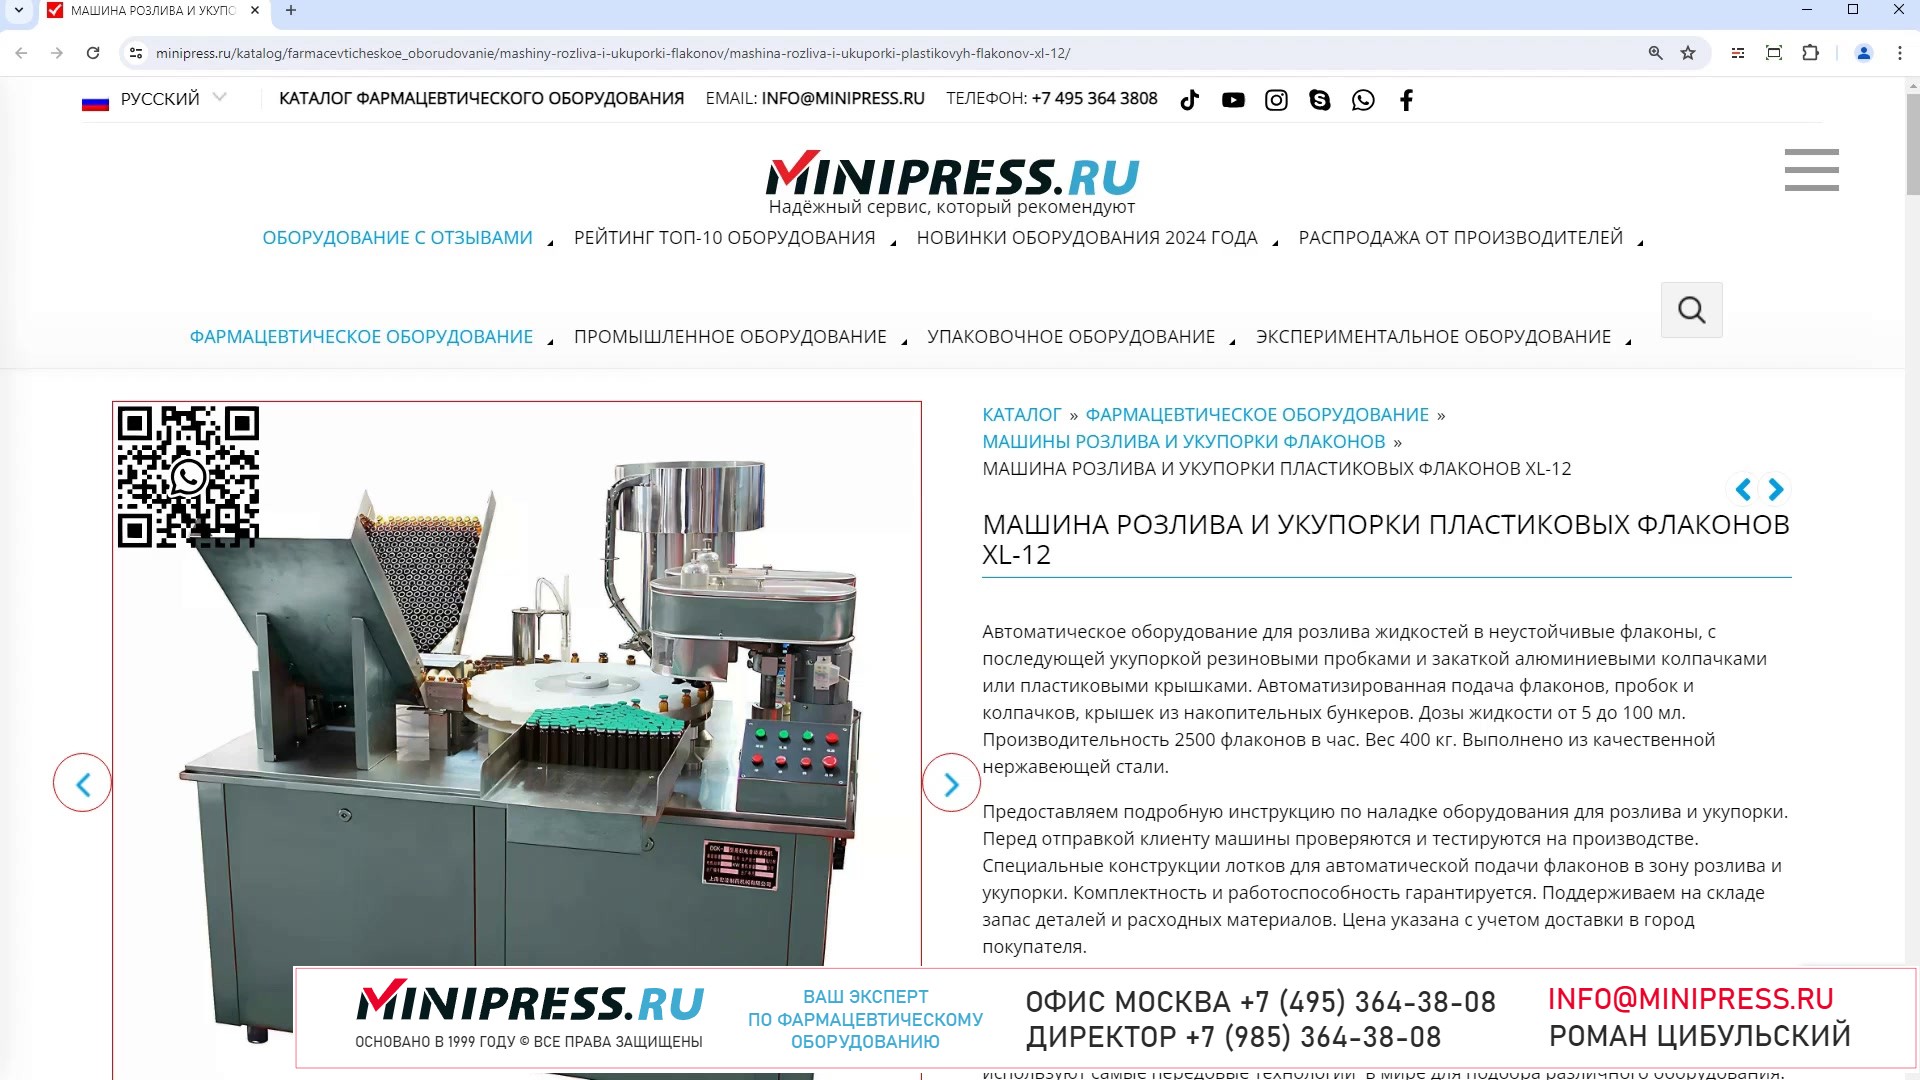 Minipress.ru Машина розлива и укупорки пластиковых флаконов XL-12